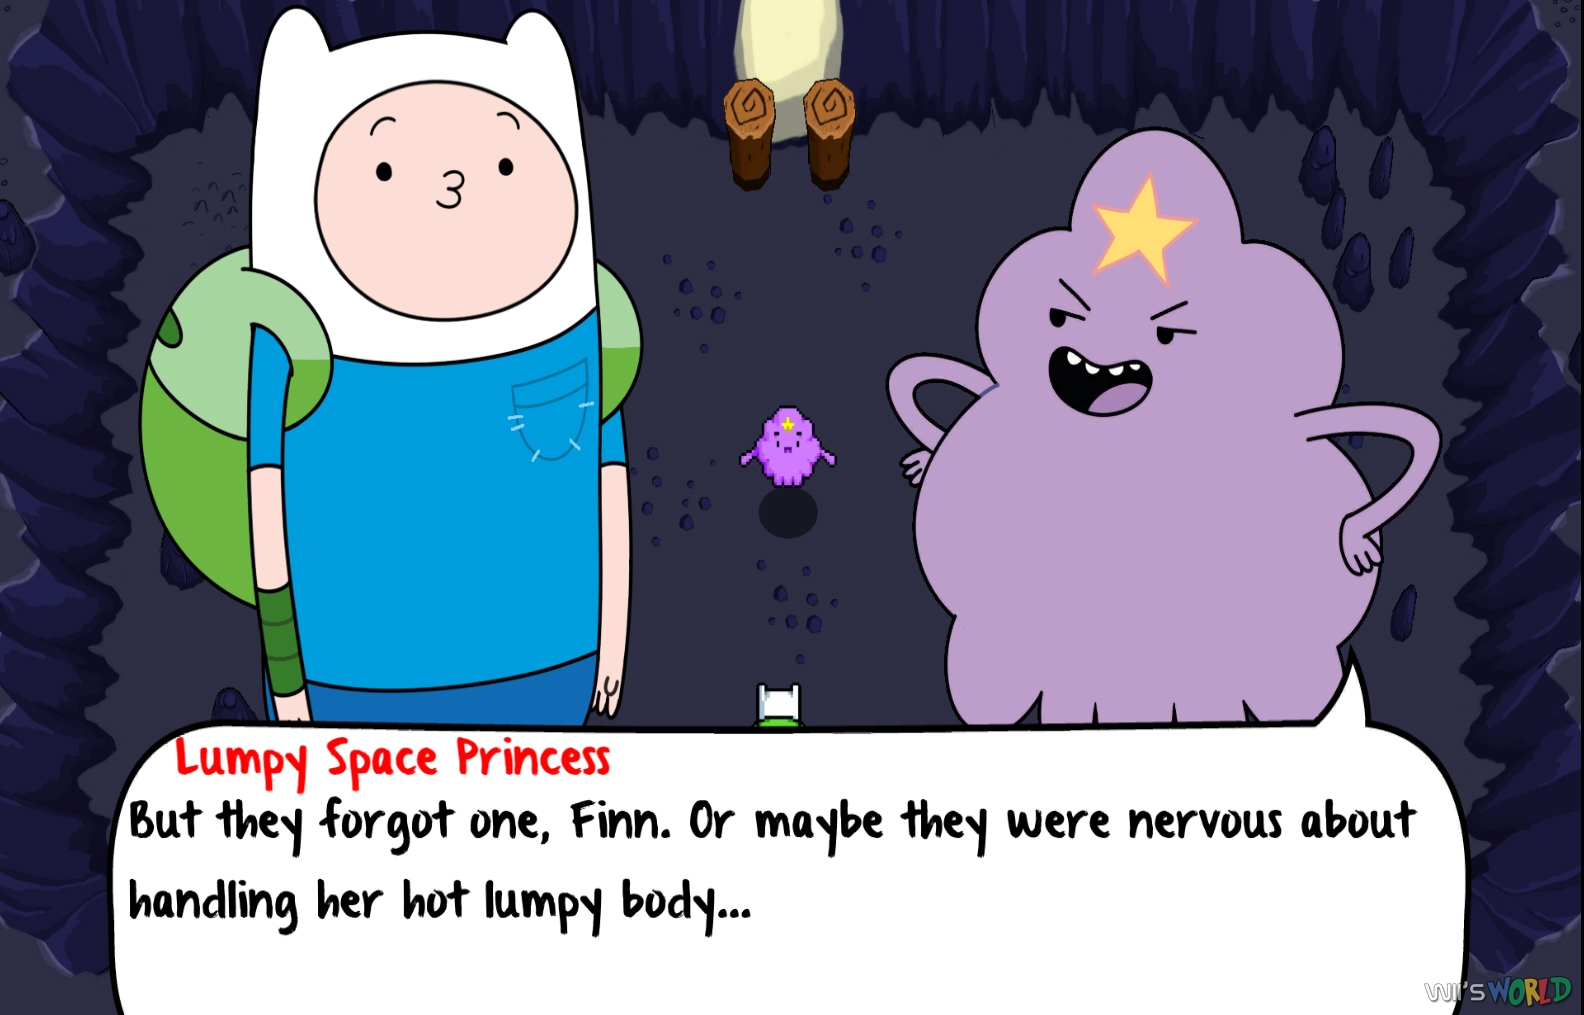 Adventure Time: The Secret of the Nameless Kingdom screenshot